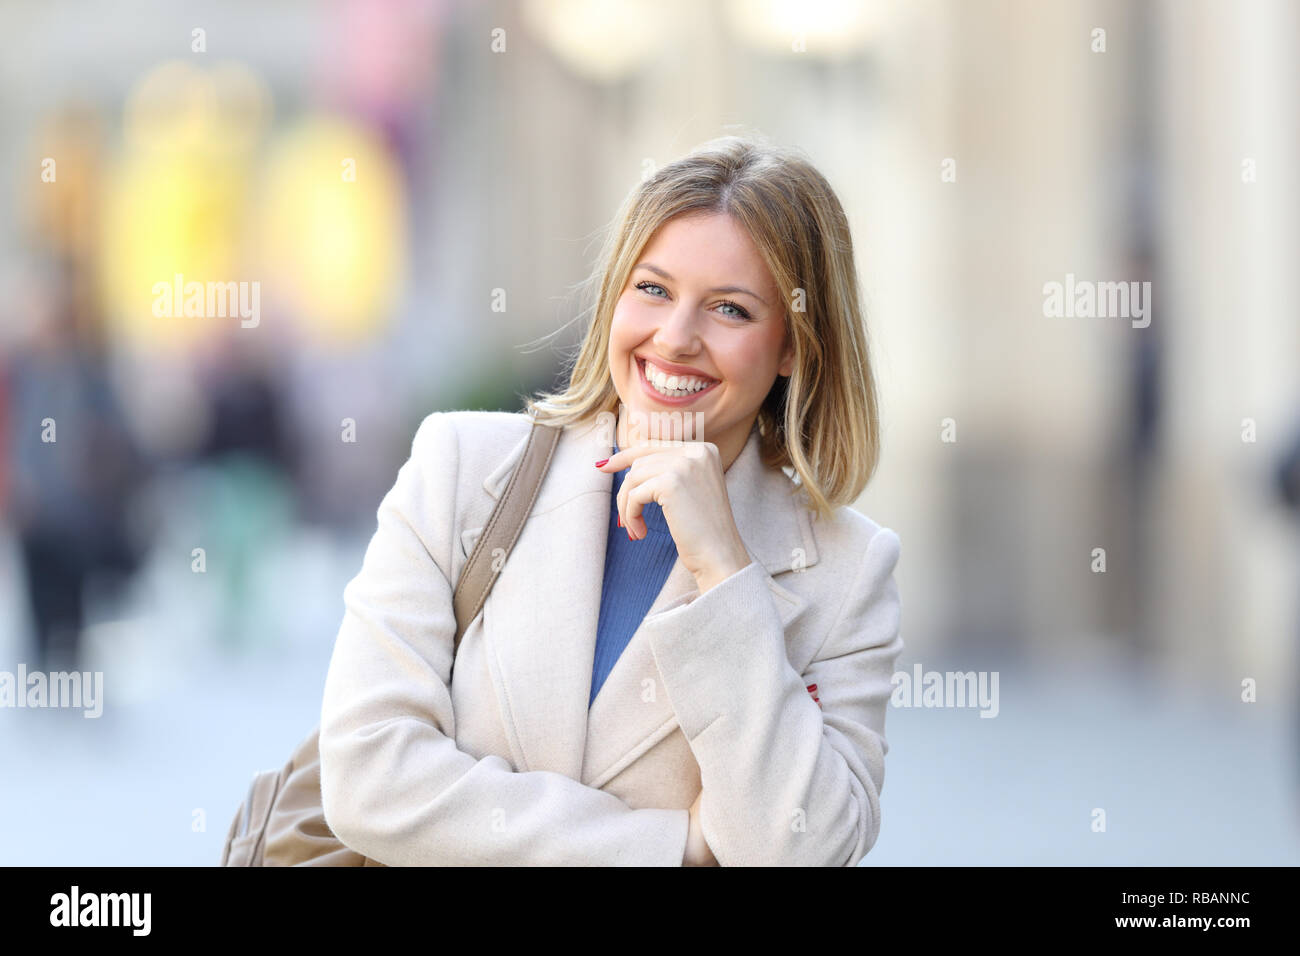 Vue avant portrait of a woman looking at camera debout dans la rue Banque D'Images